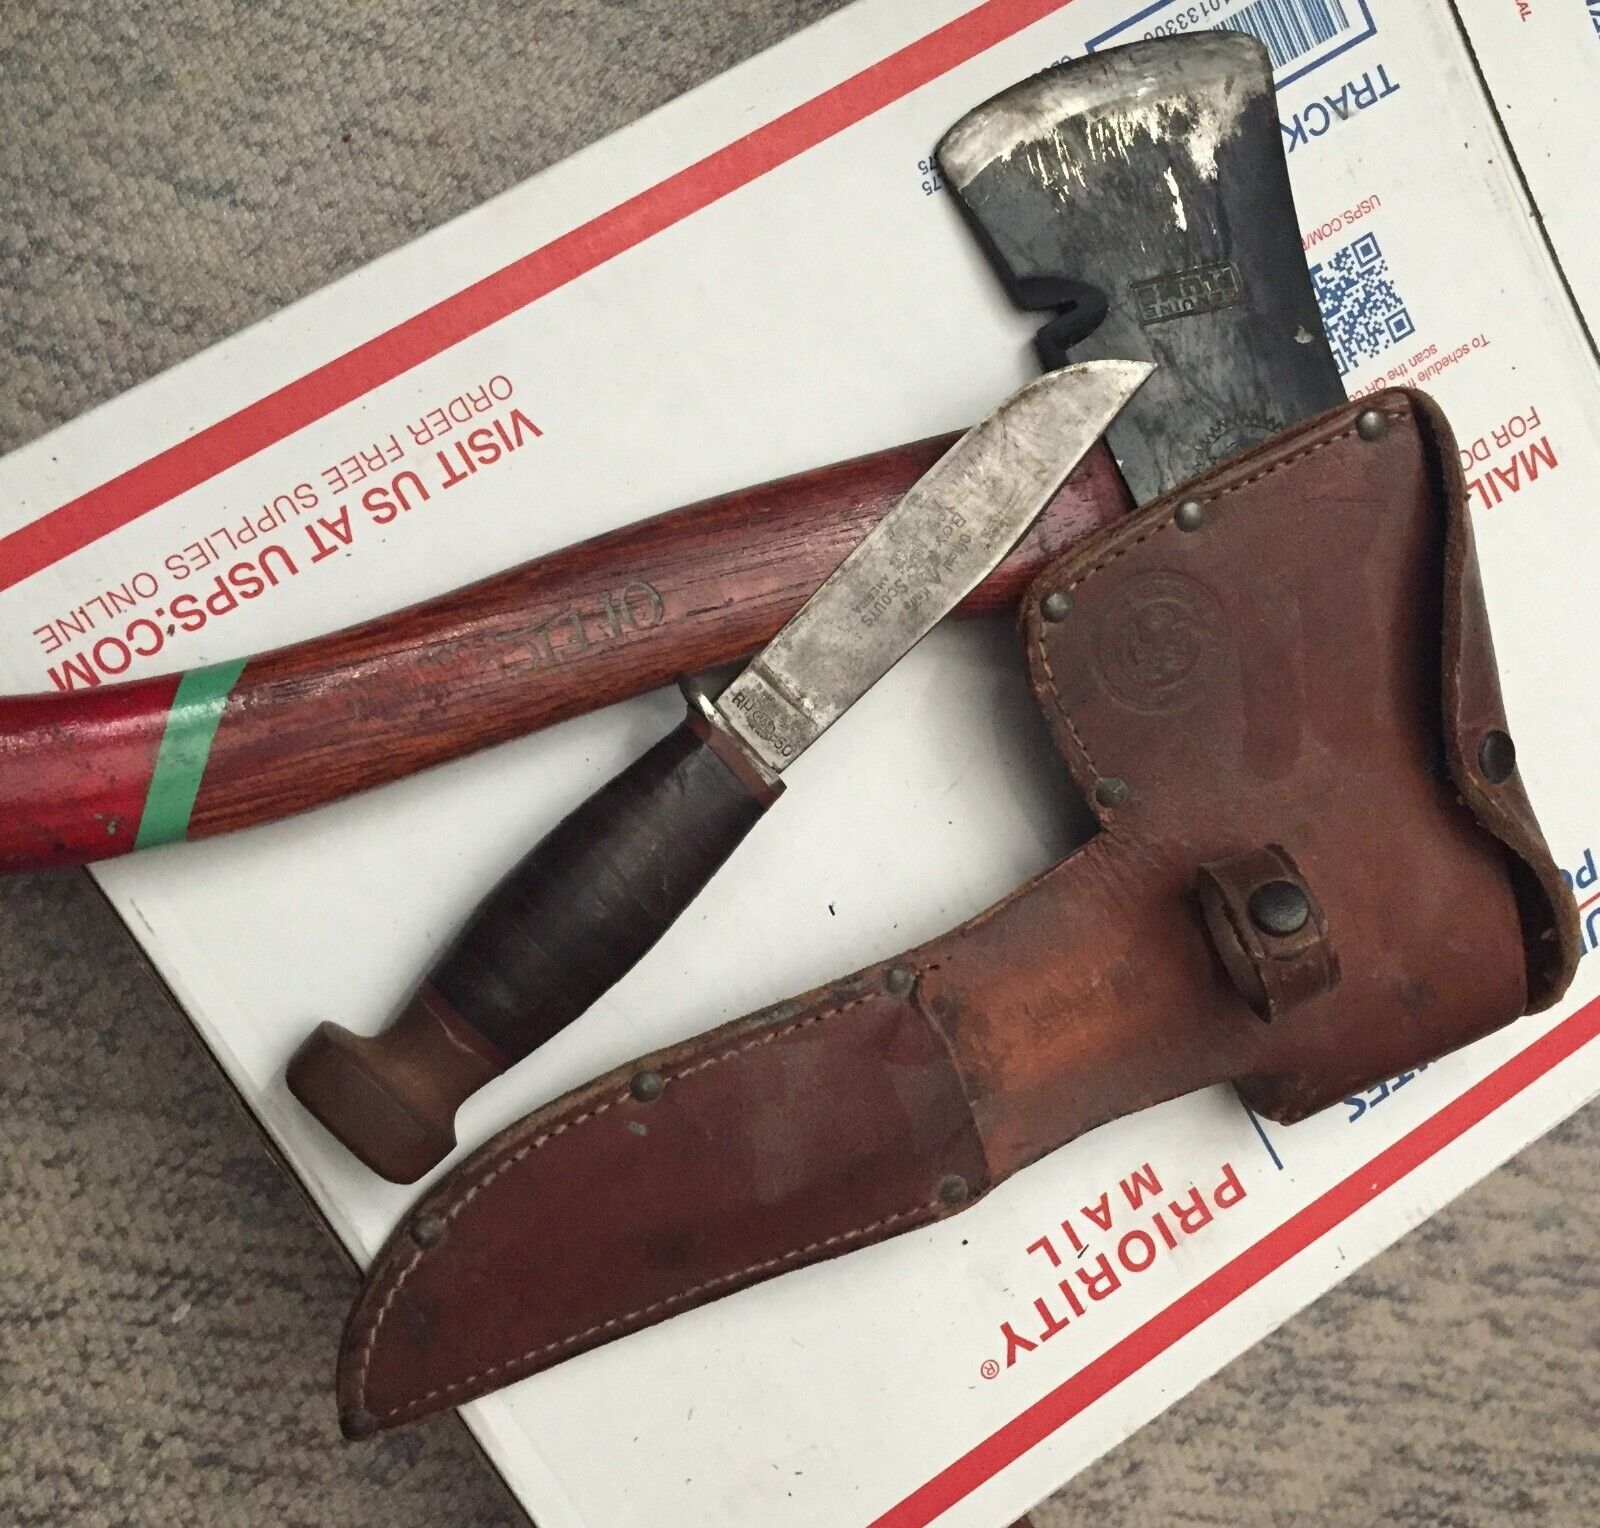 BSA  Kit Carson Set - All Original - RH 50 - Wood Pumel Sheat Knife with Etching